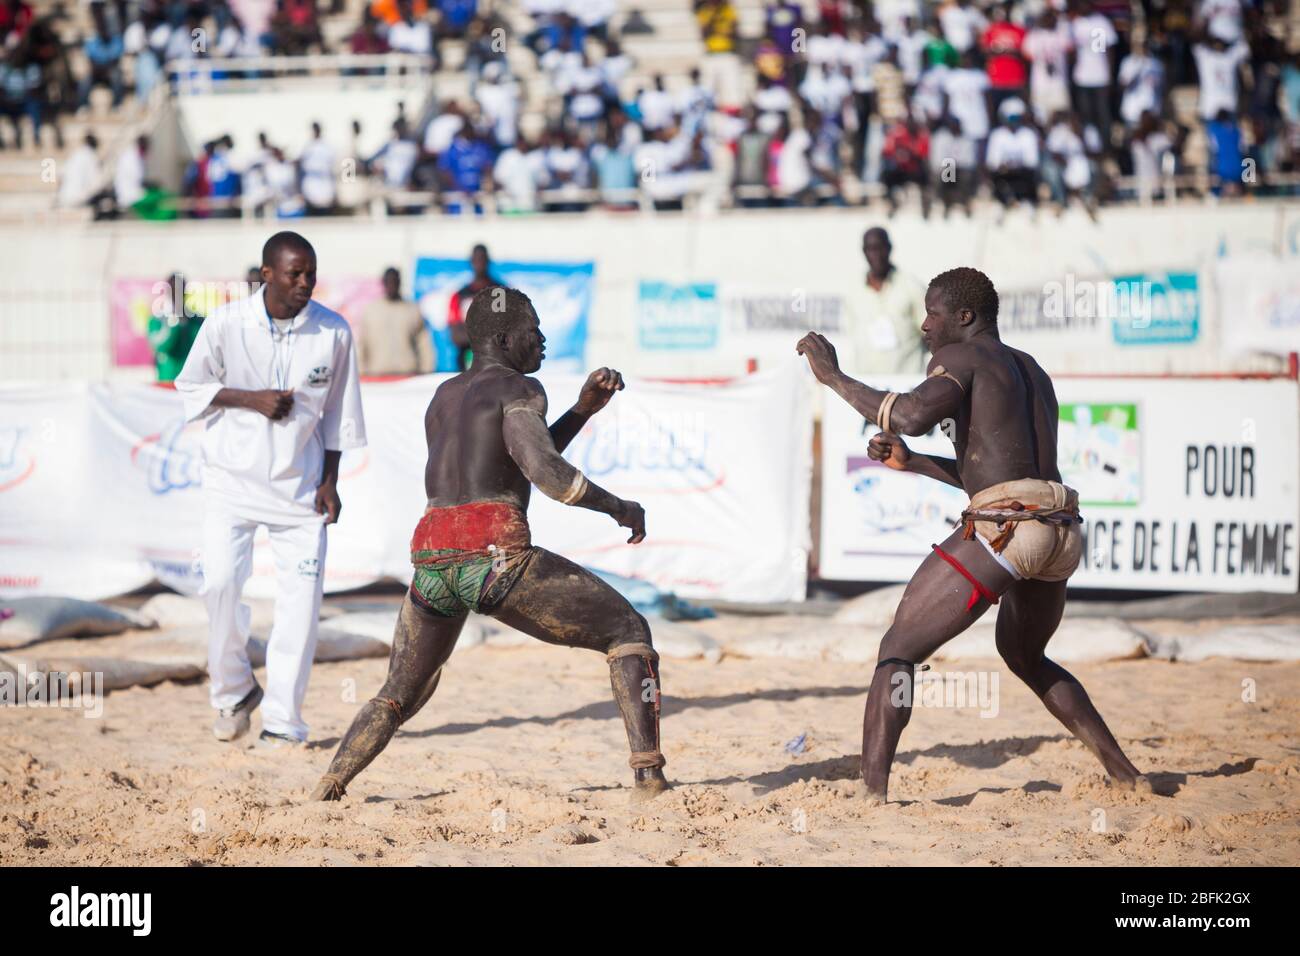 Wrestlers duking it out in Dakar, Senegal. Stock Photo